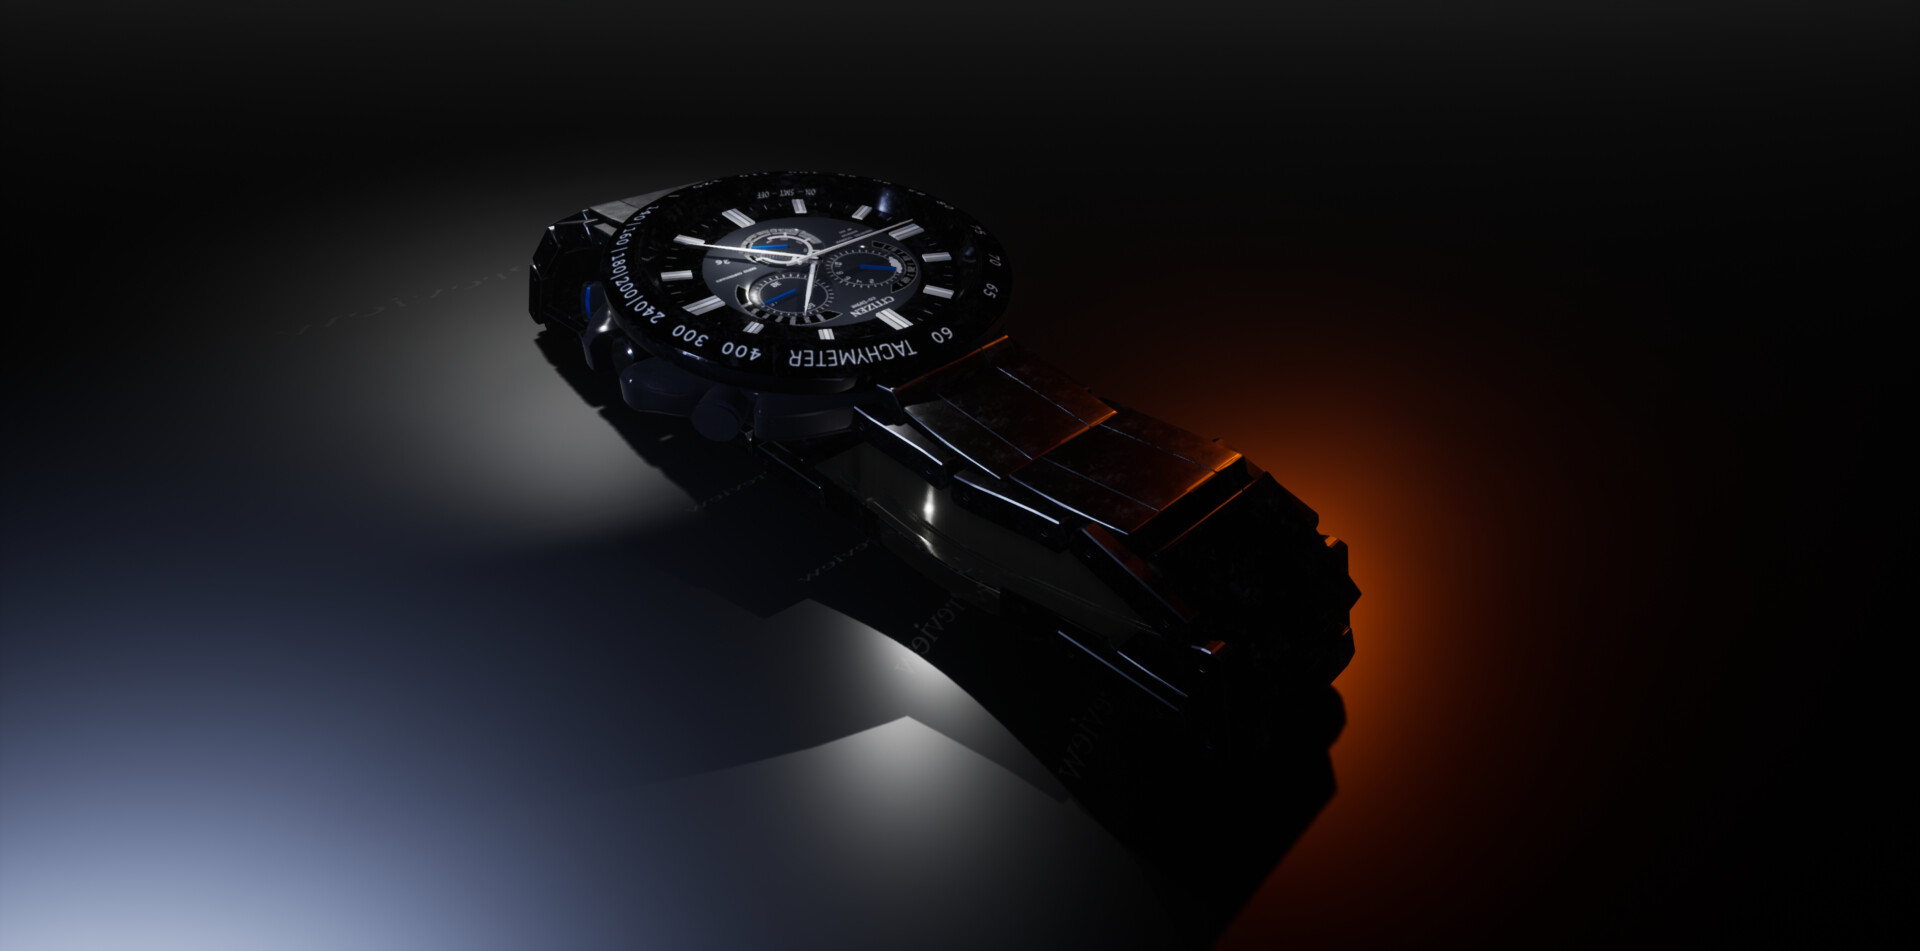 BA Games Art scene by Alexander Norman showing a black metallic watch in orange and blue lighting.